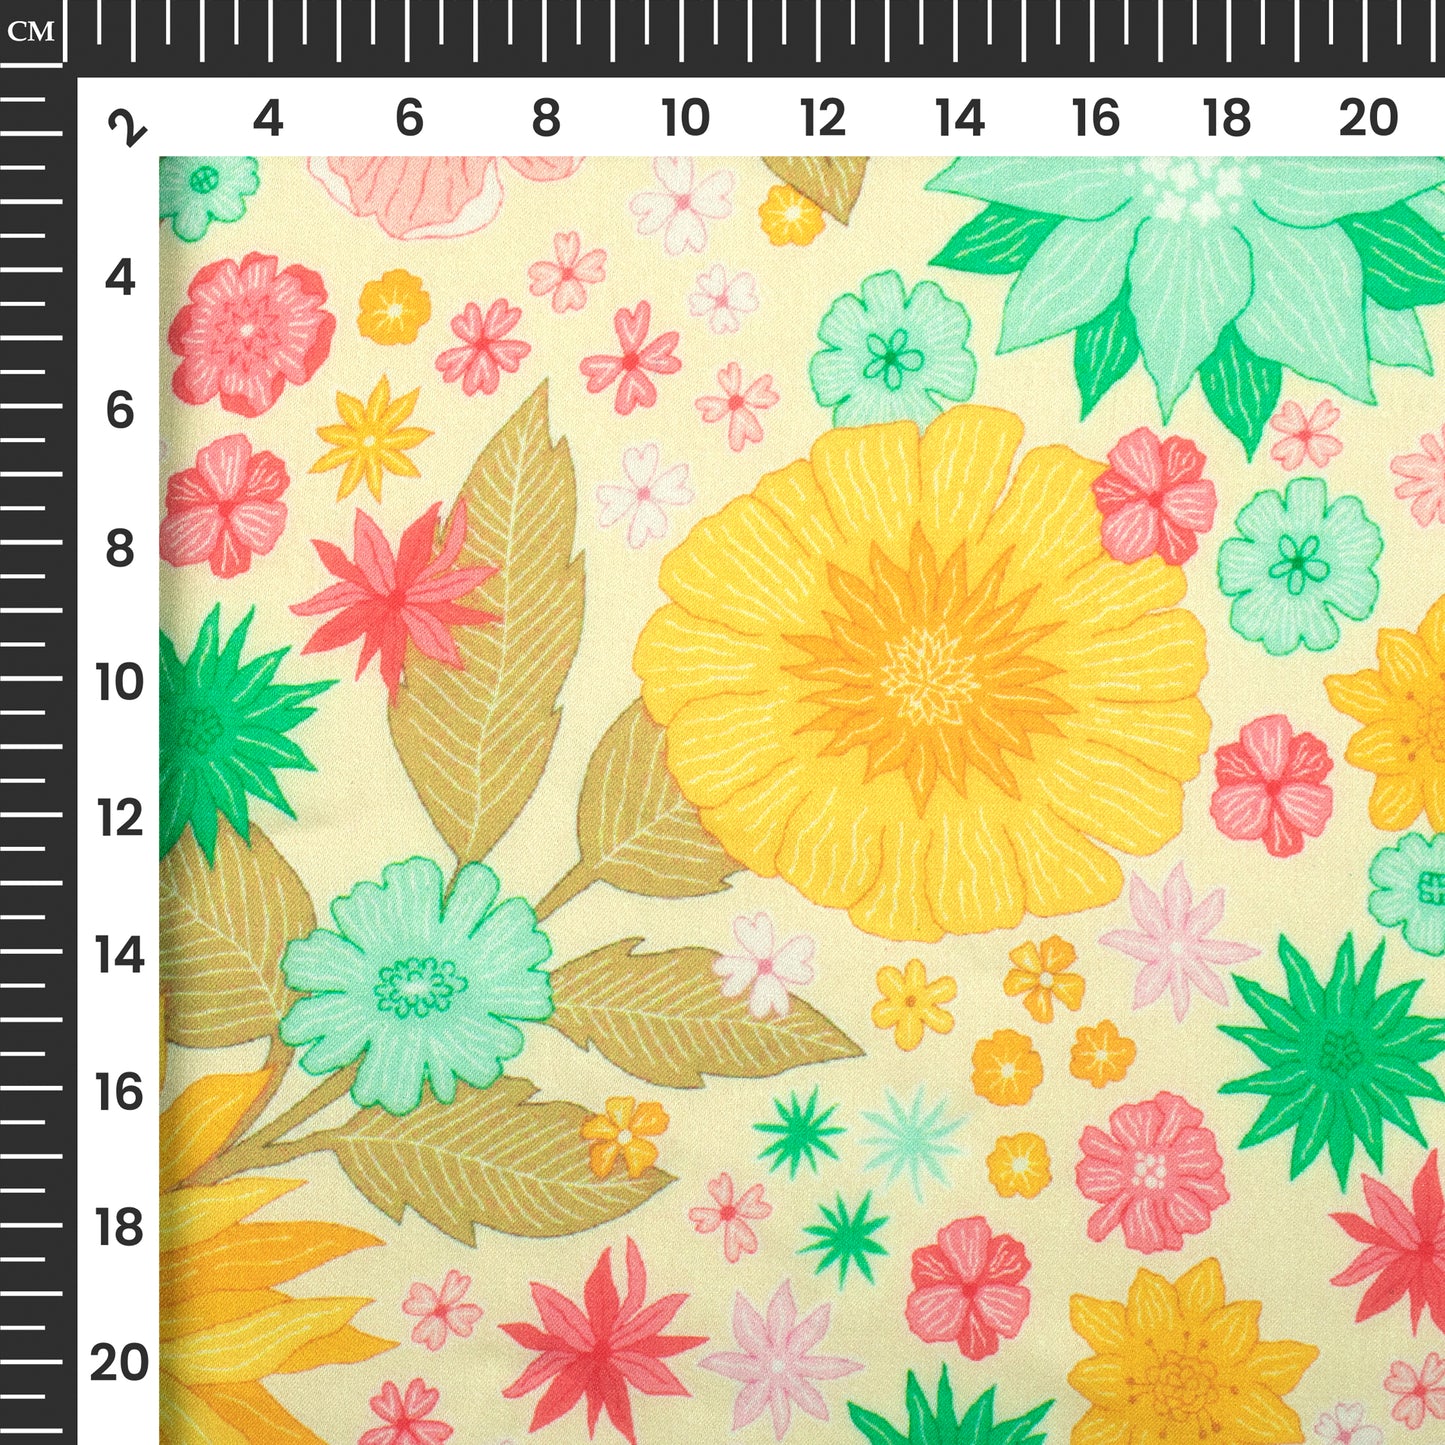 Charming Floral Digital Print Georgette Satin Fabric